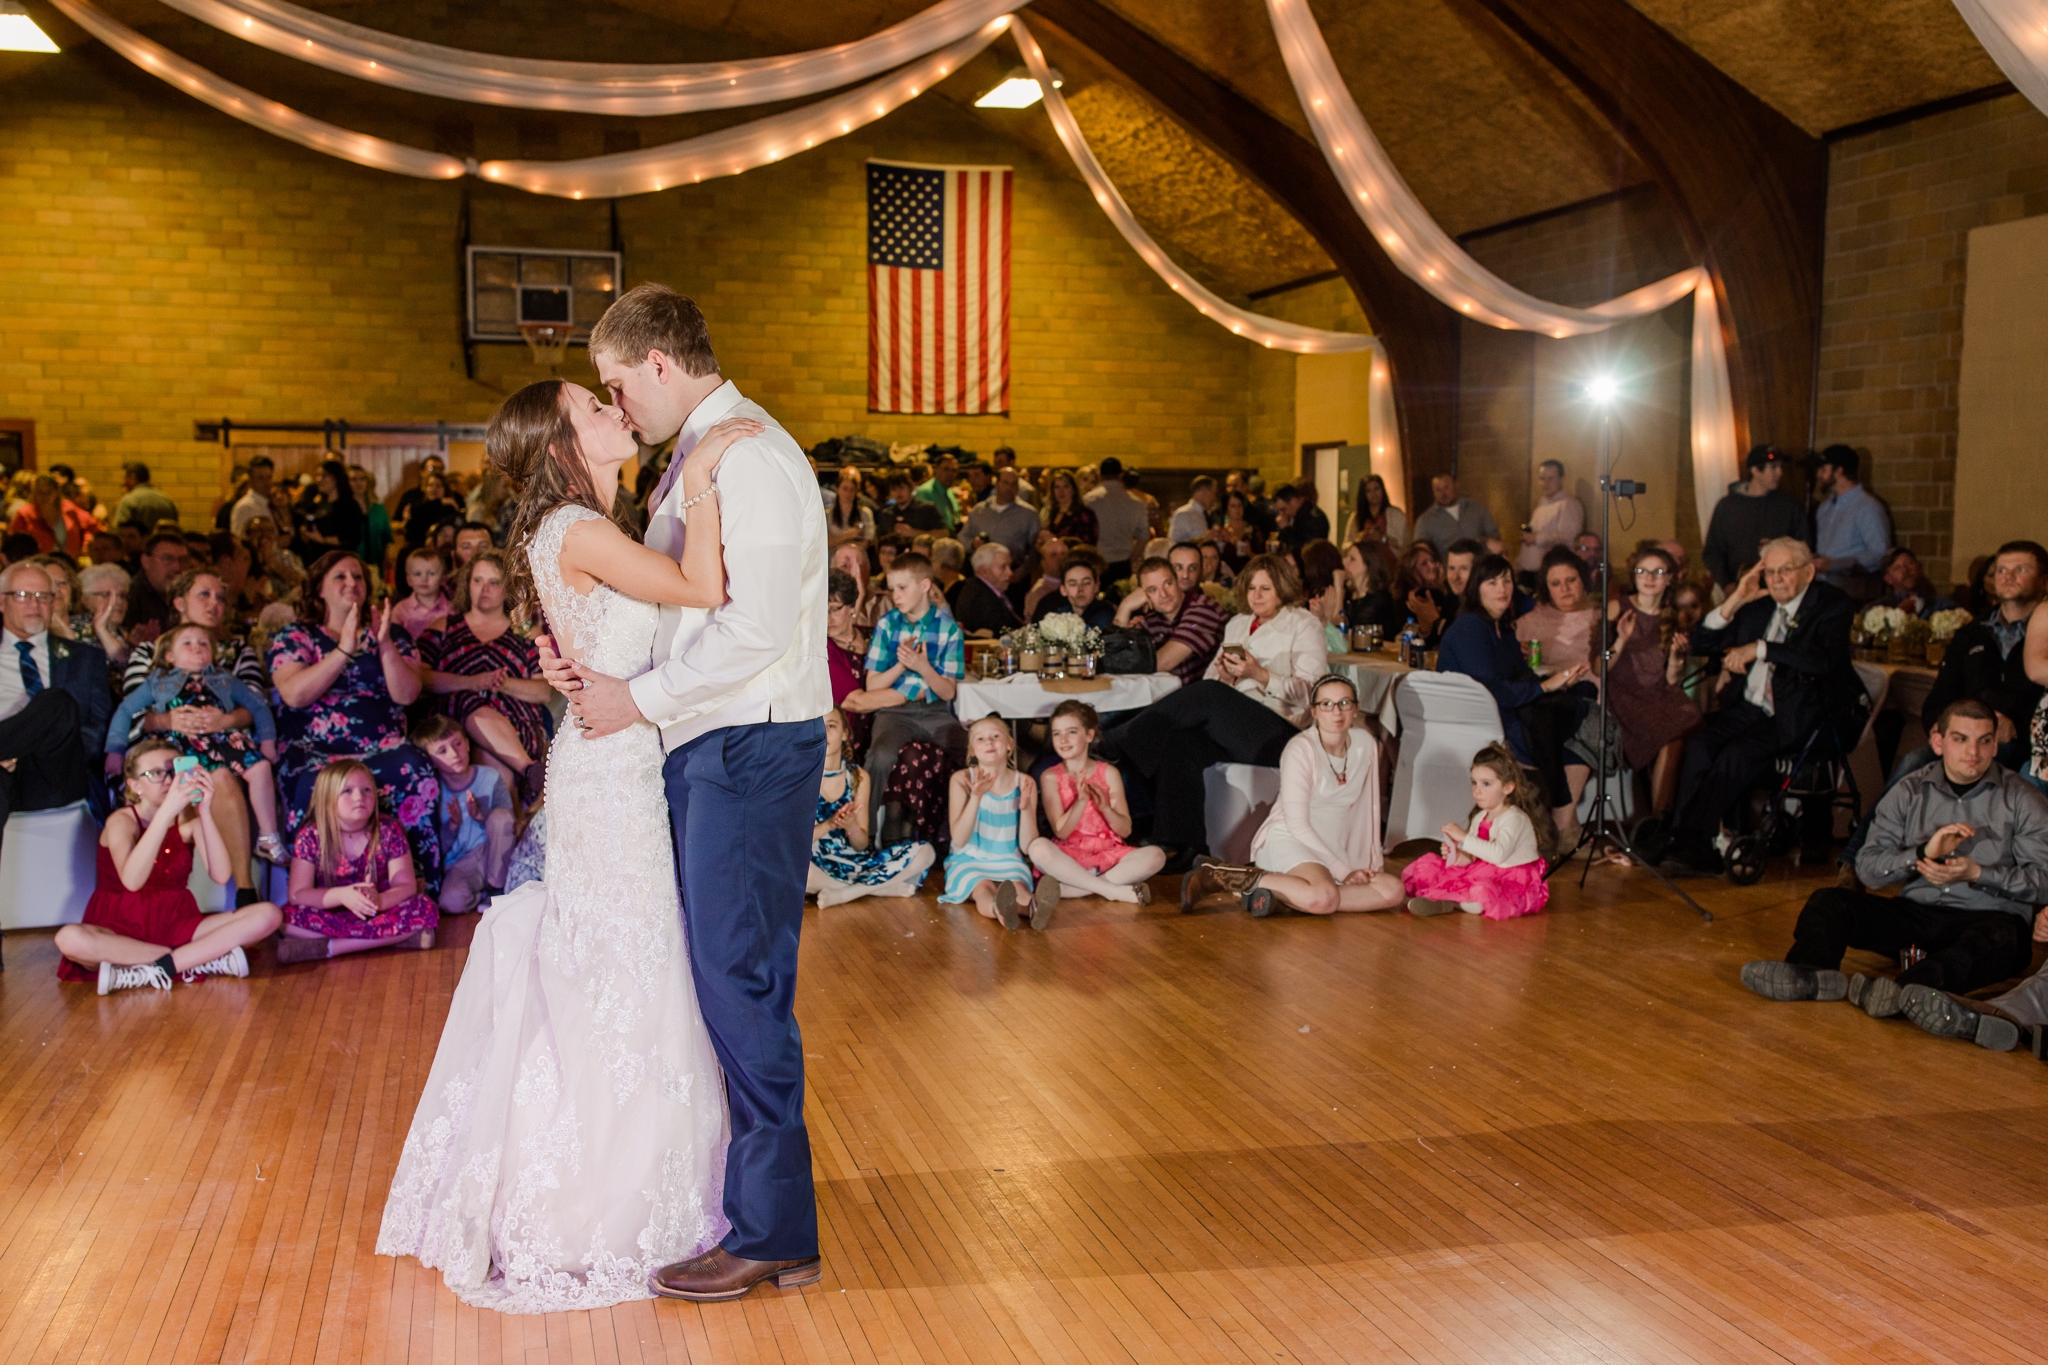 Minnesota wedding photographers, St Martin Minnesota Wedding, Brittney and Caleb